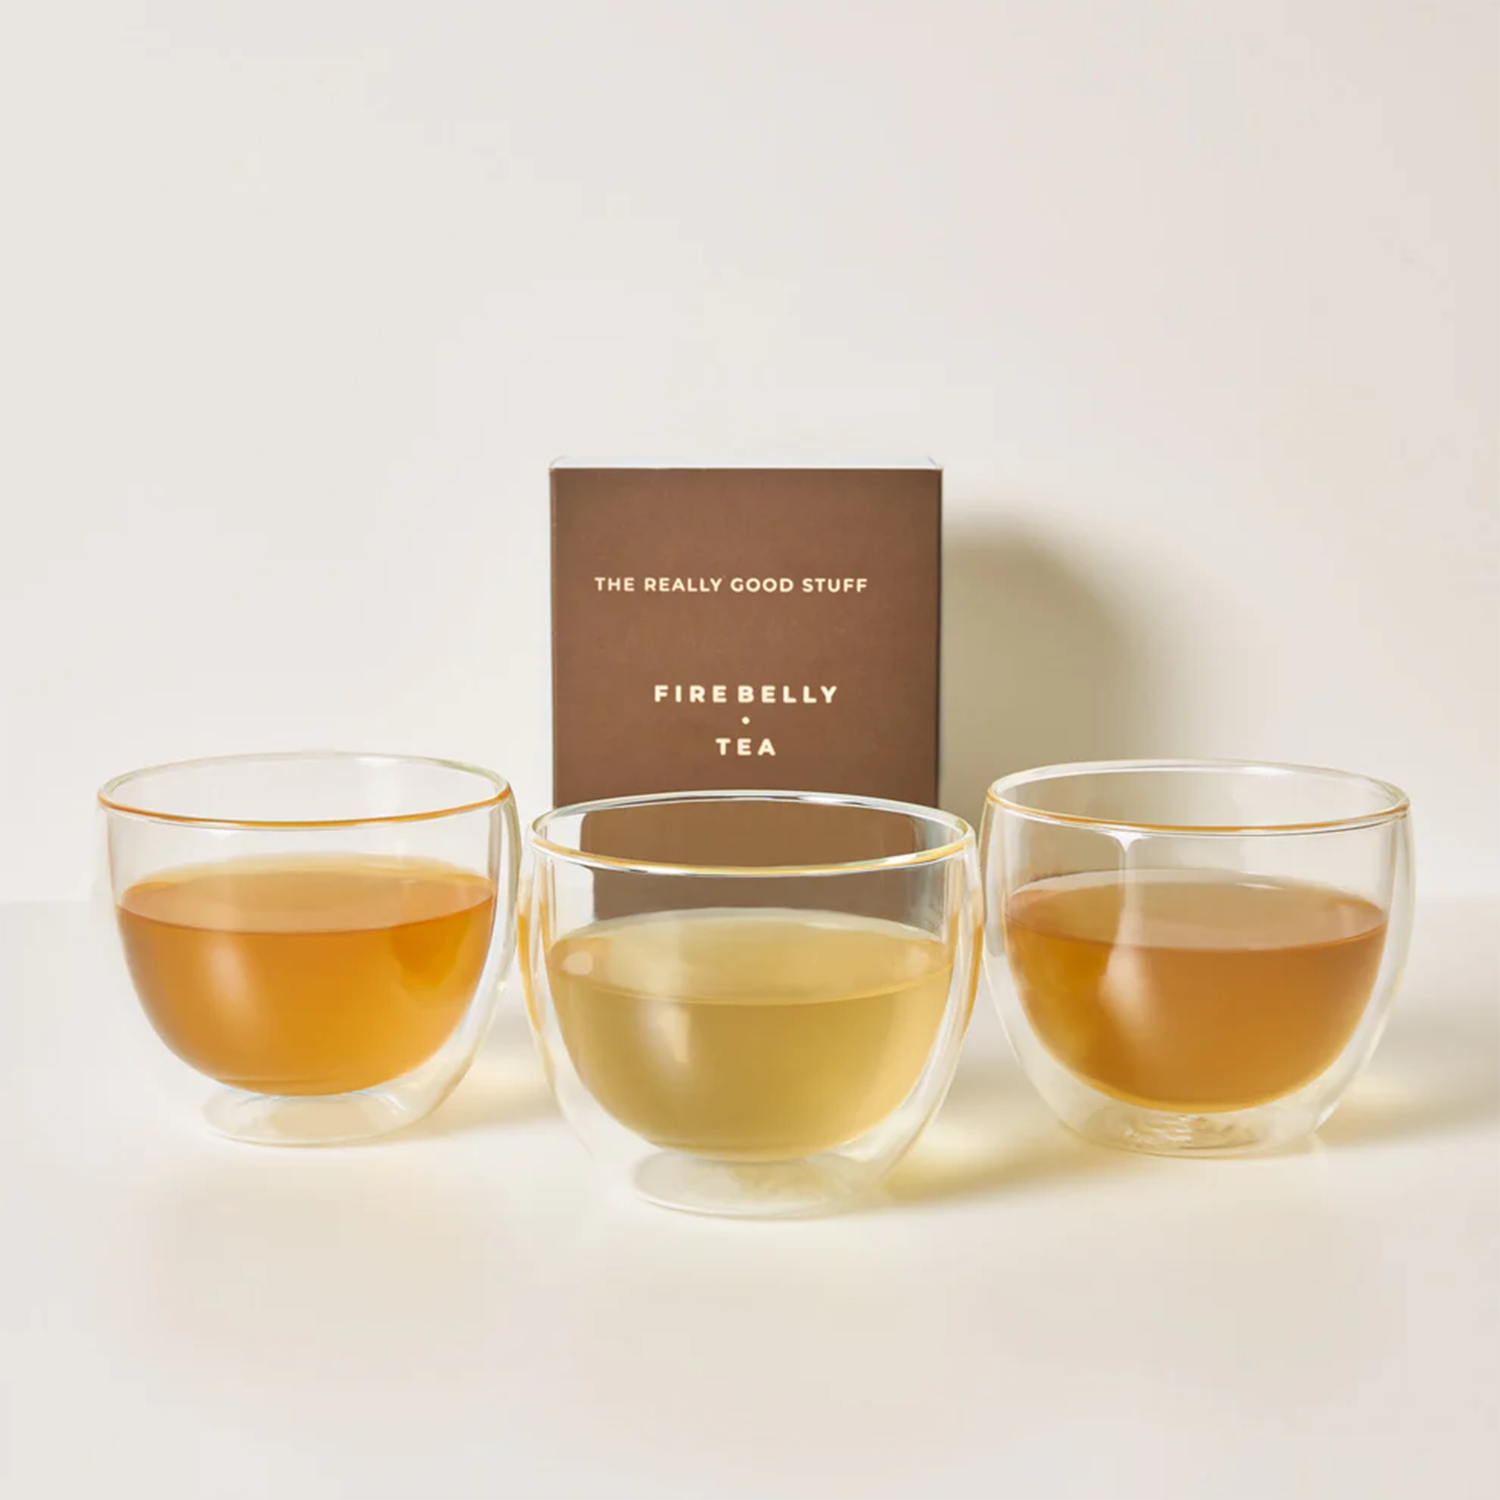 3 tea sampler the really good stuff firebelly tea